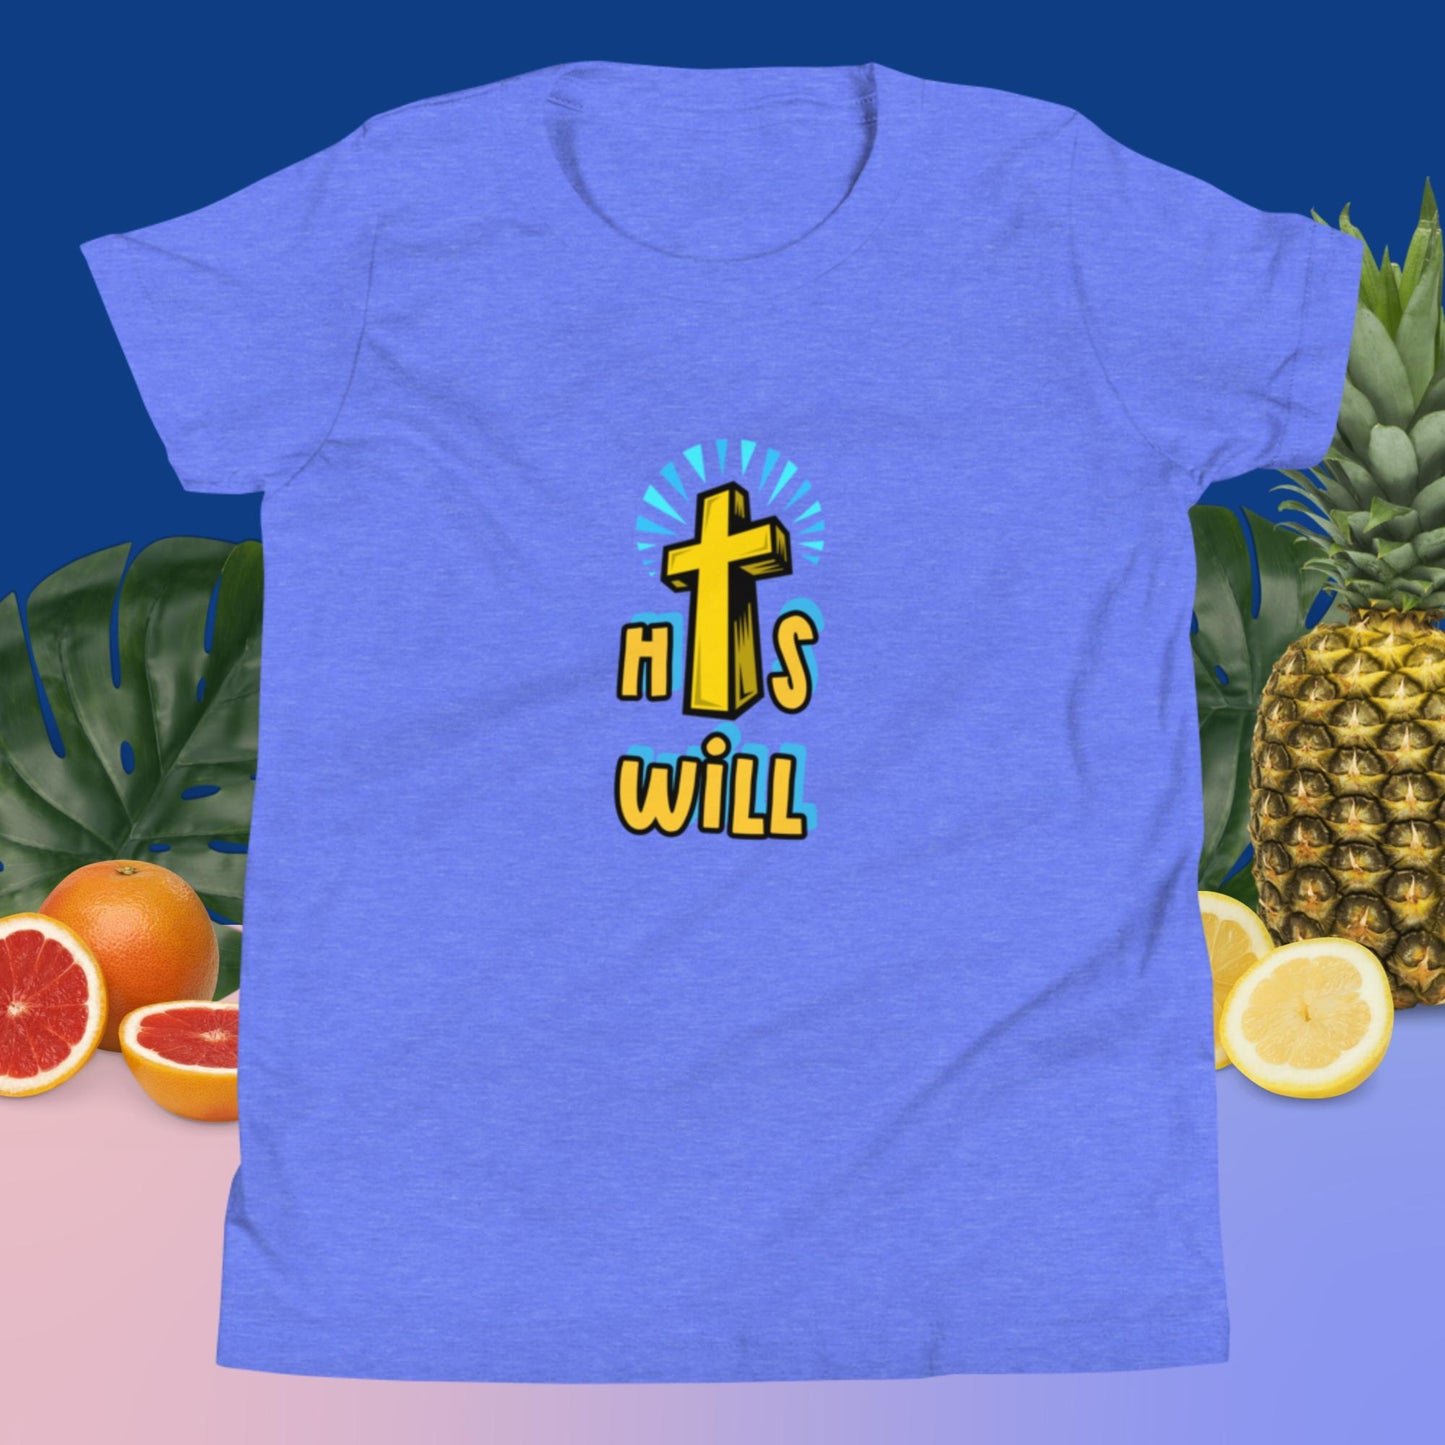 "HIS WILL" Kids Short Sleeve T-Shirt